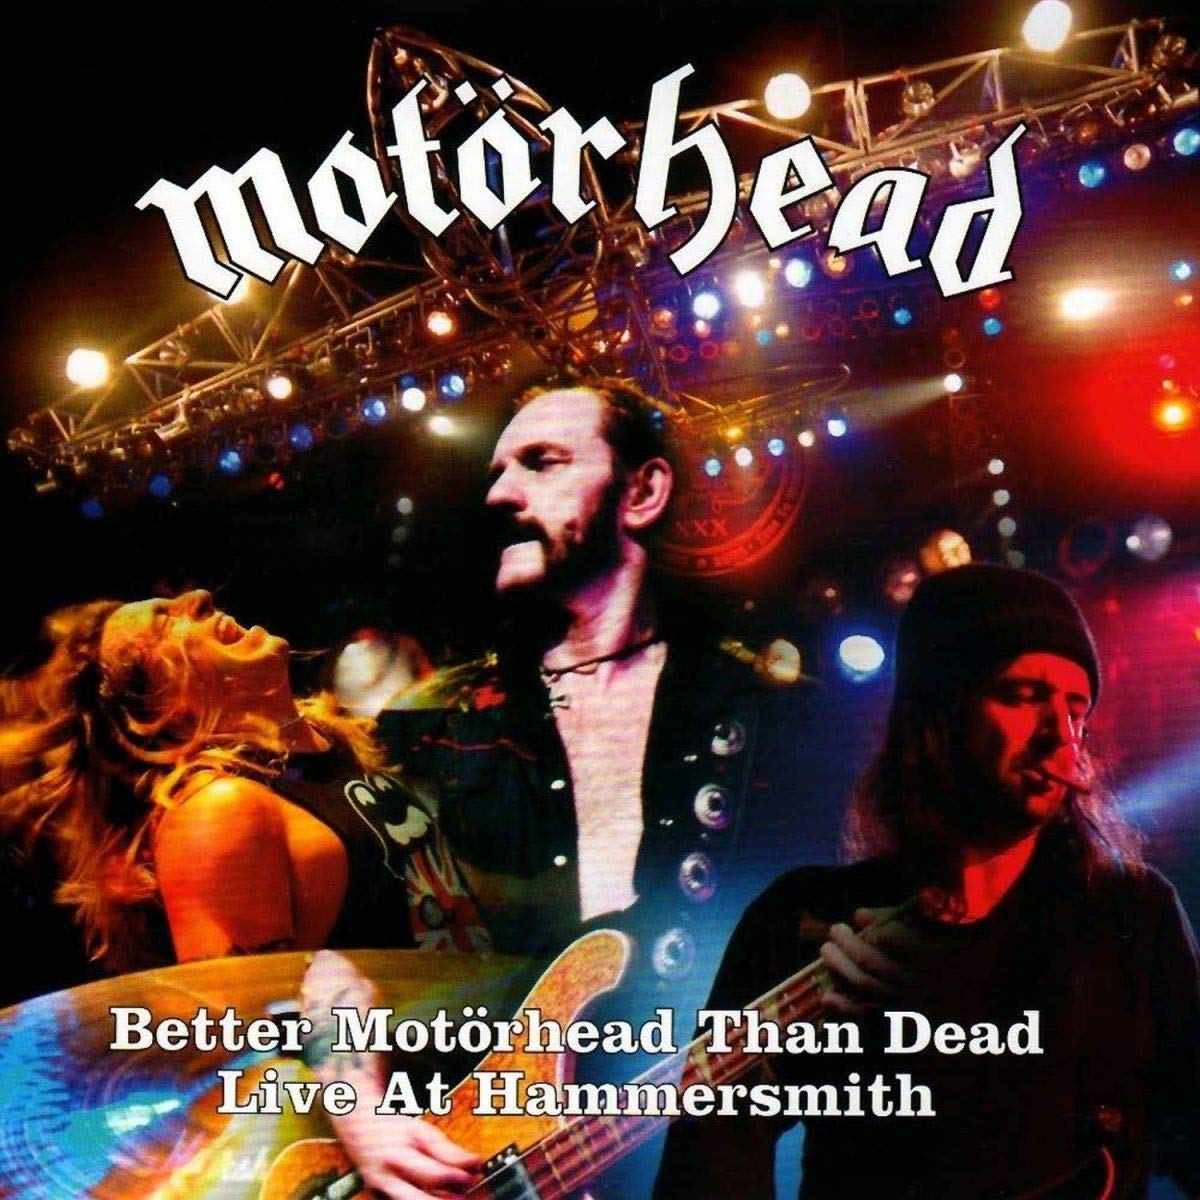 MOTORHEAD - BETTER MOTORHEAD THAN DEAD - LIVE AT HAMMERSMITH - 4LP VINYL - Wah Wah Records